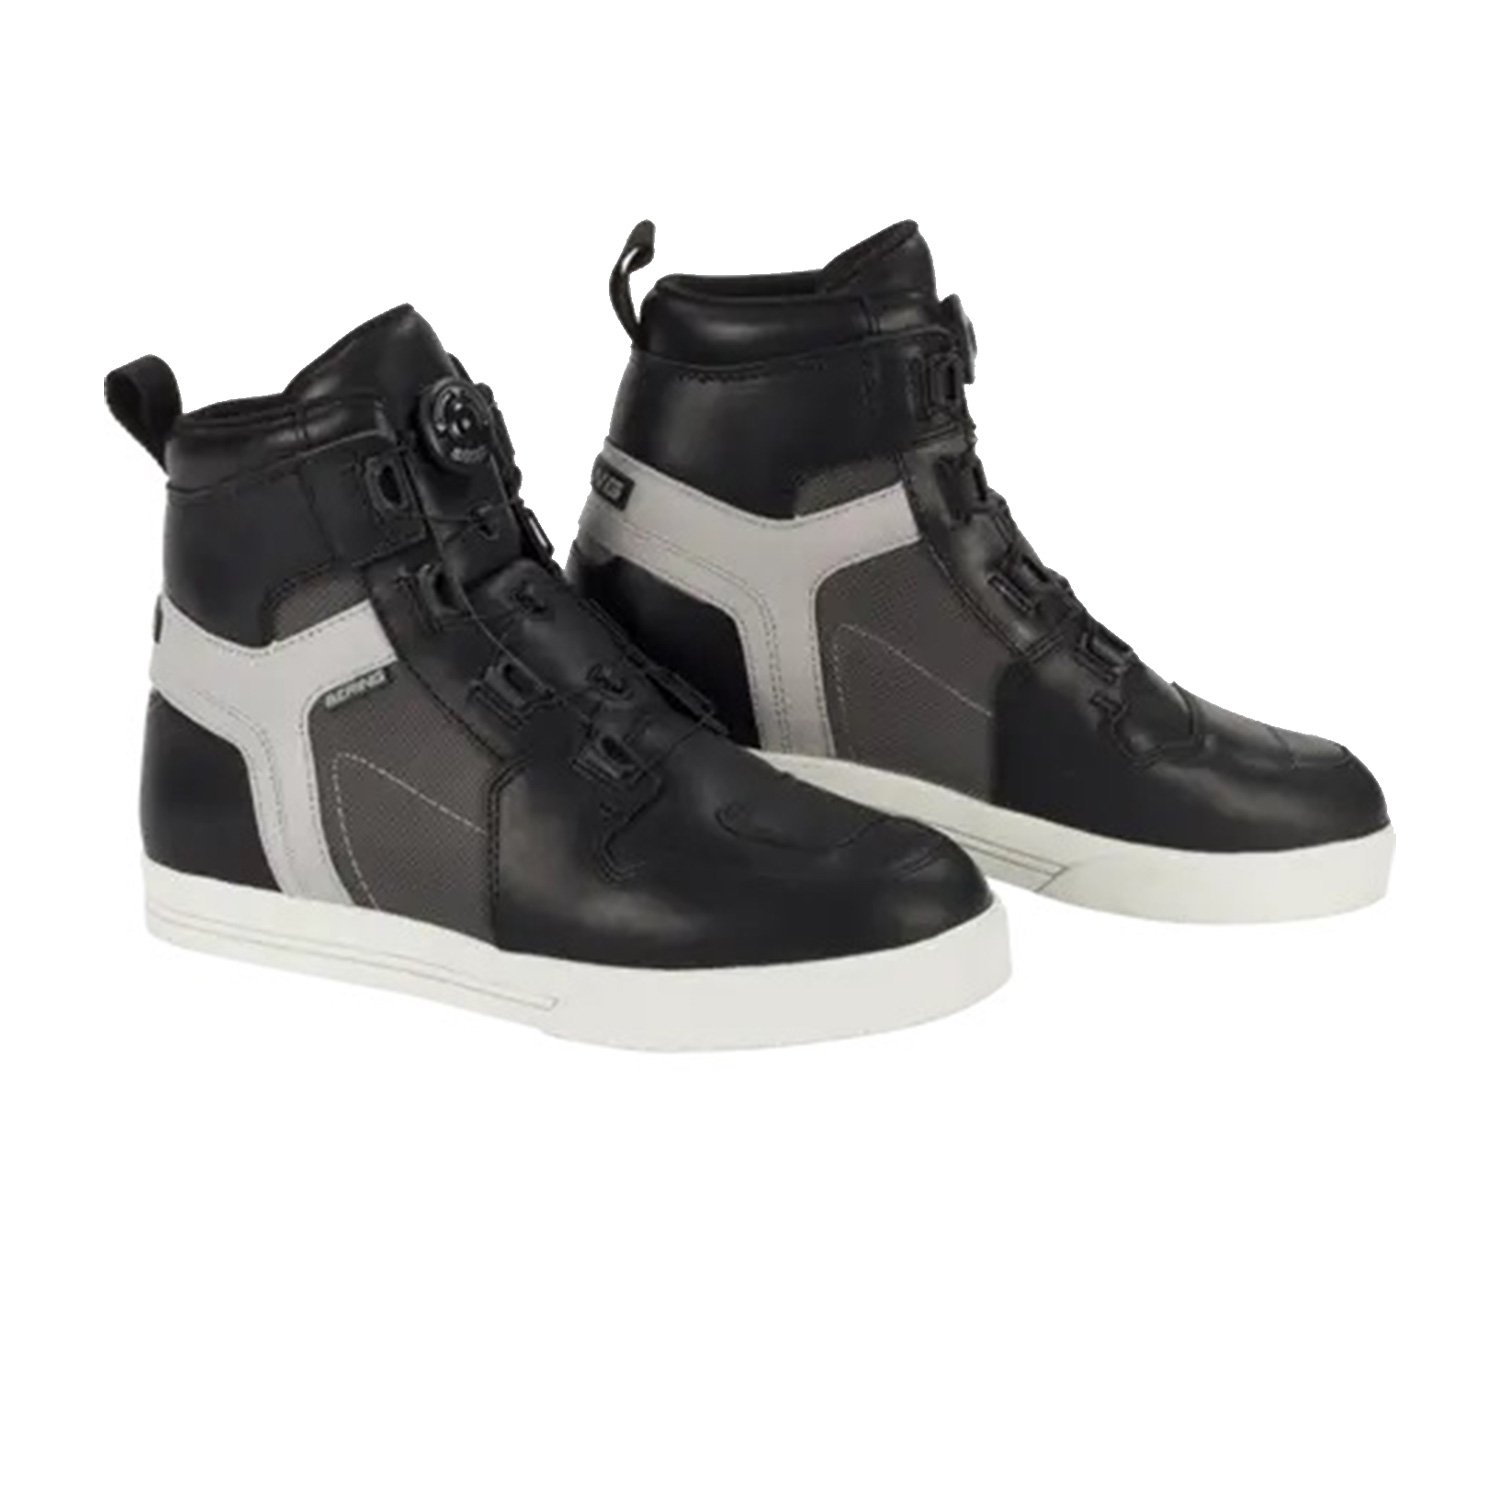 Image of Bering Sneakers Reflex Vented Black Grey Size 45 EN